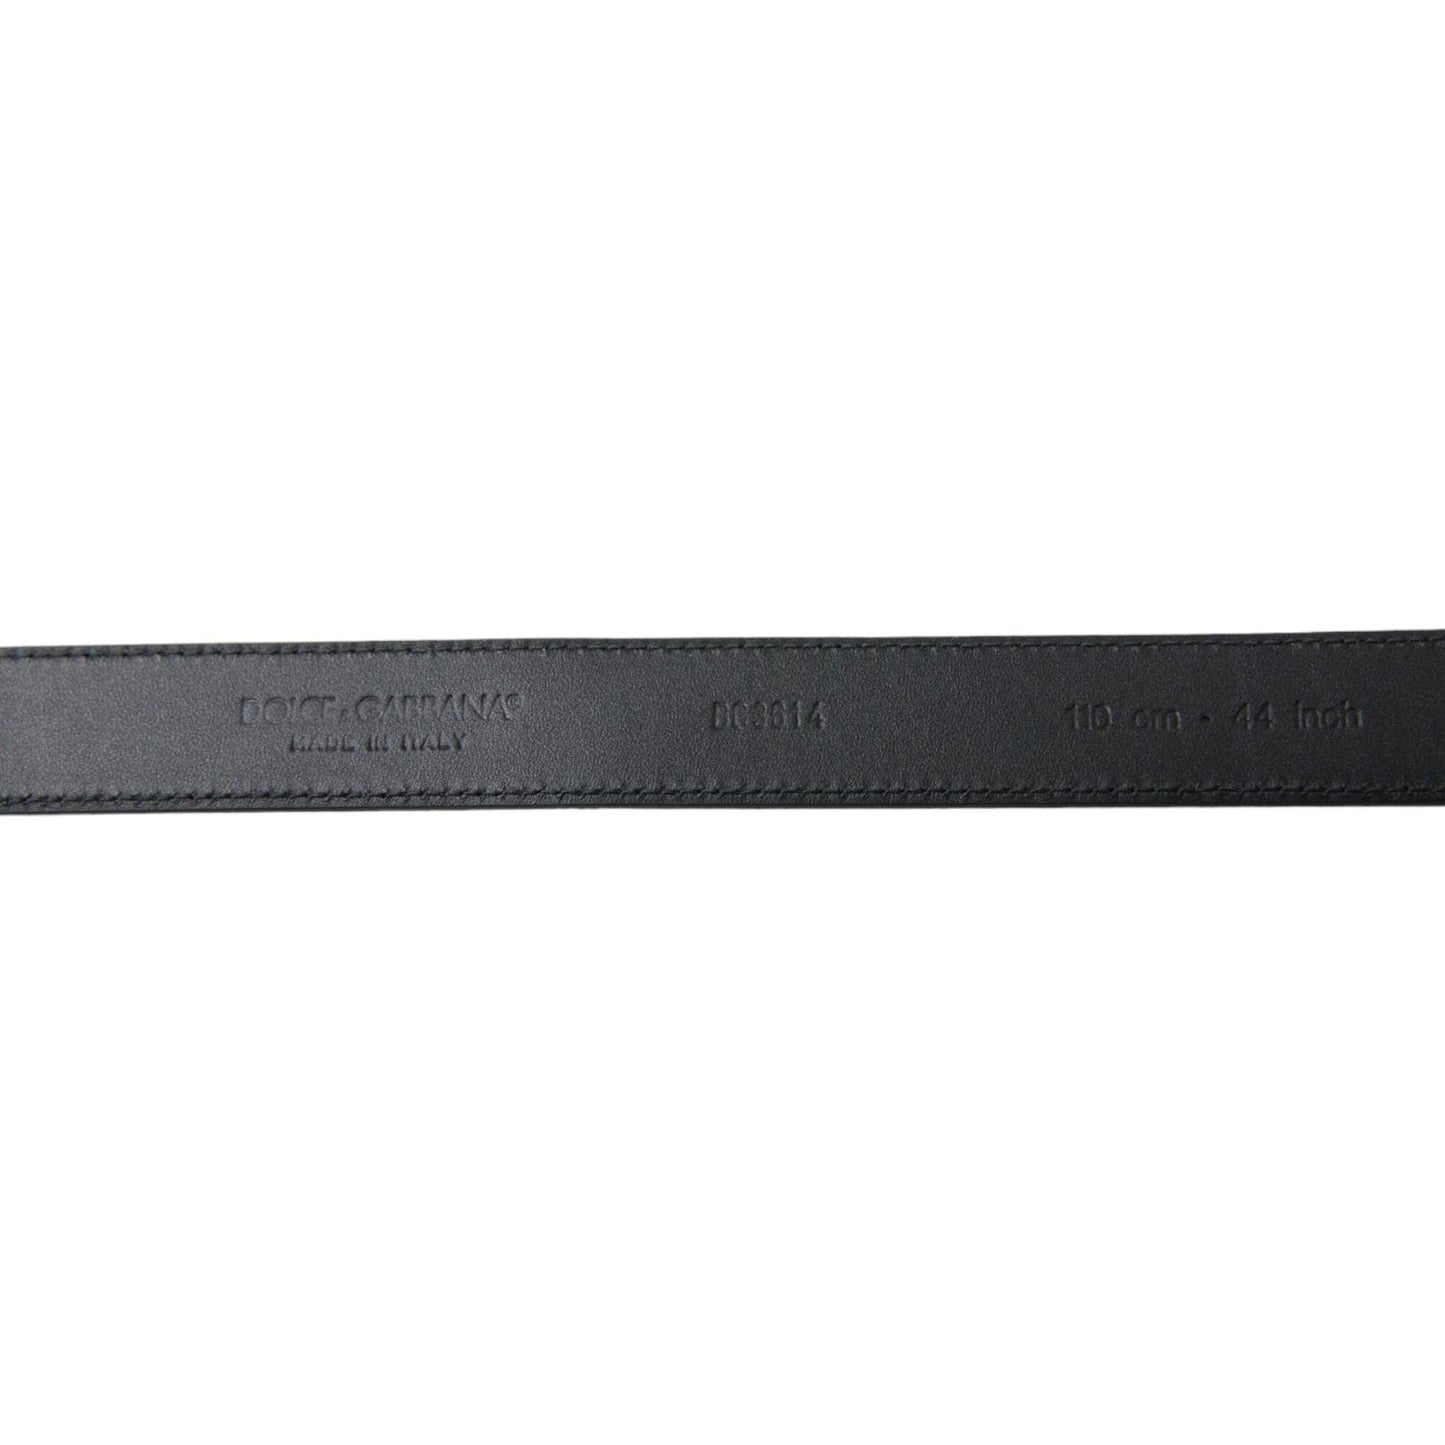 Dolce & Gabbana Elegant Black Leather Belt with Metal Buckle elegant-black-leather-belt-with-metal-buckle-10